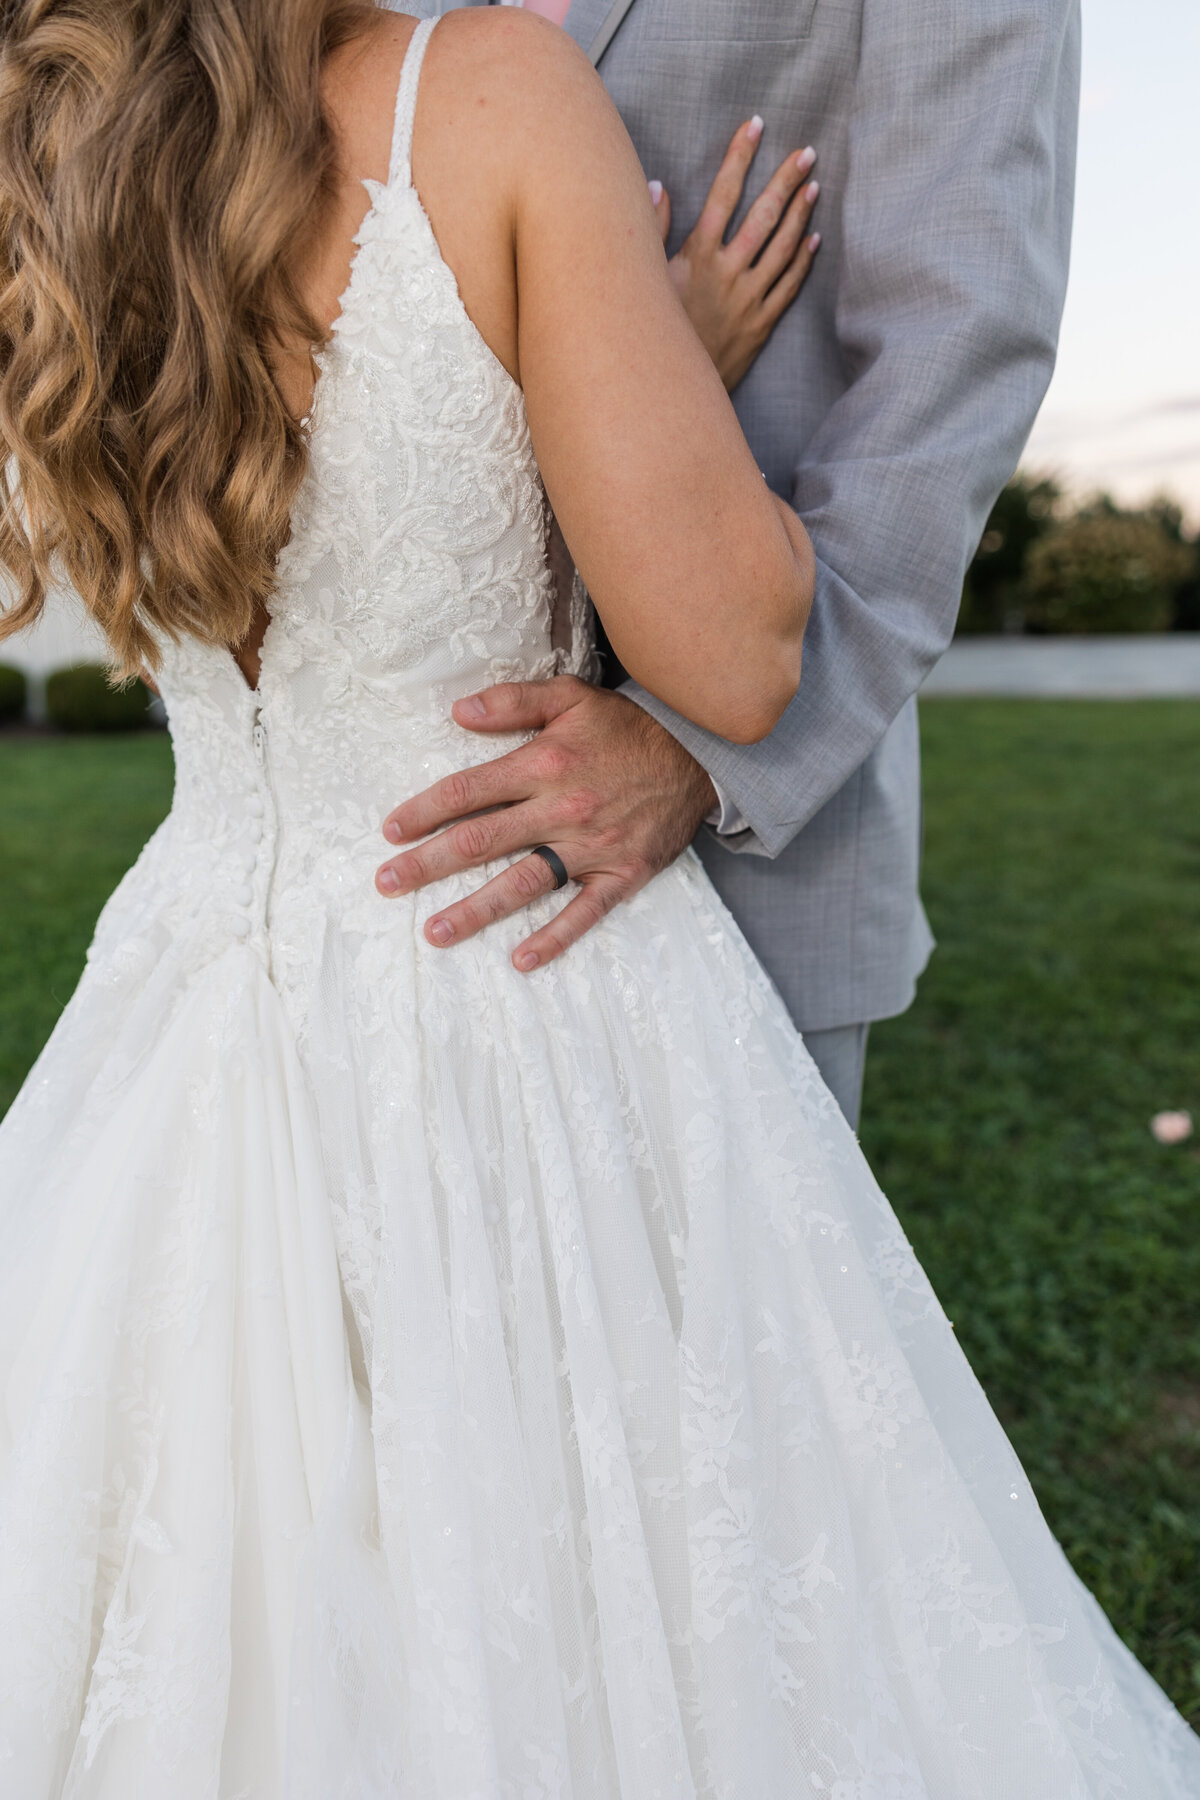 Kelsie & Marc Wedding - Taylor'd Southern Events - Maryland Wedding Photographer -2841